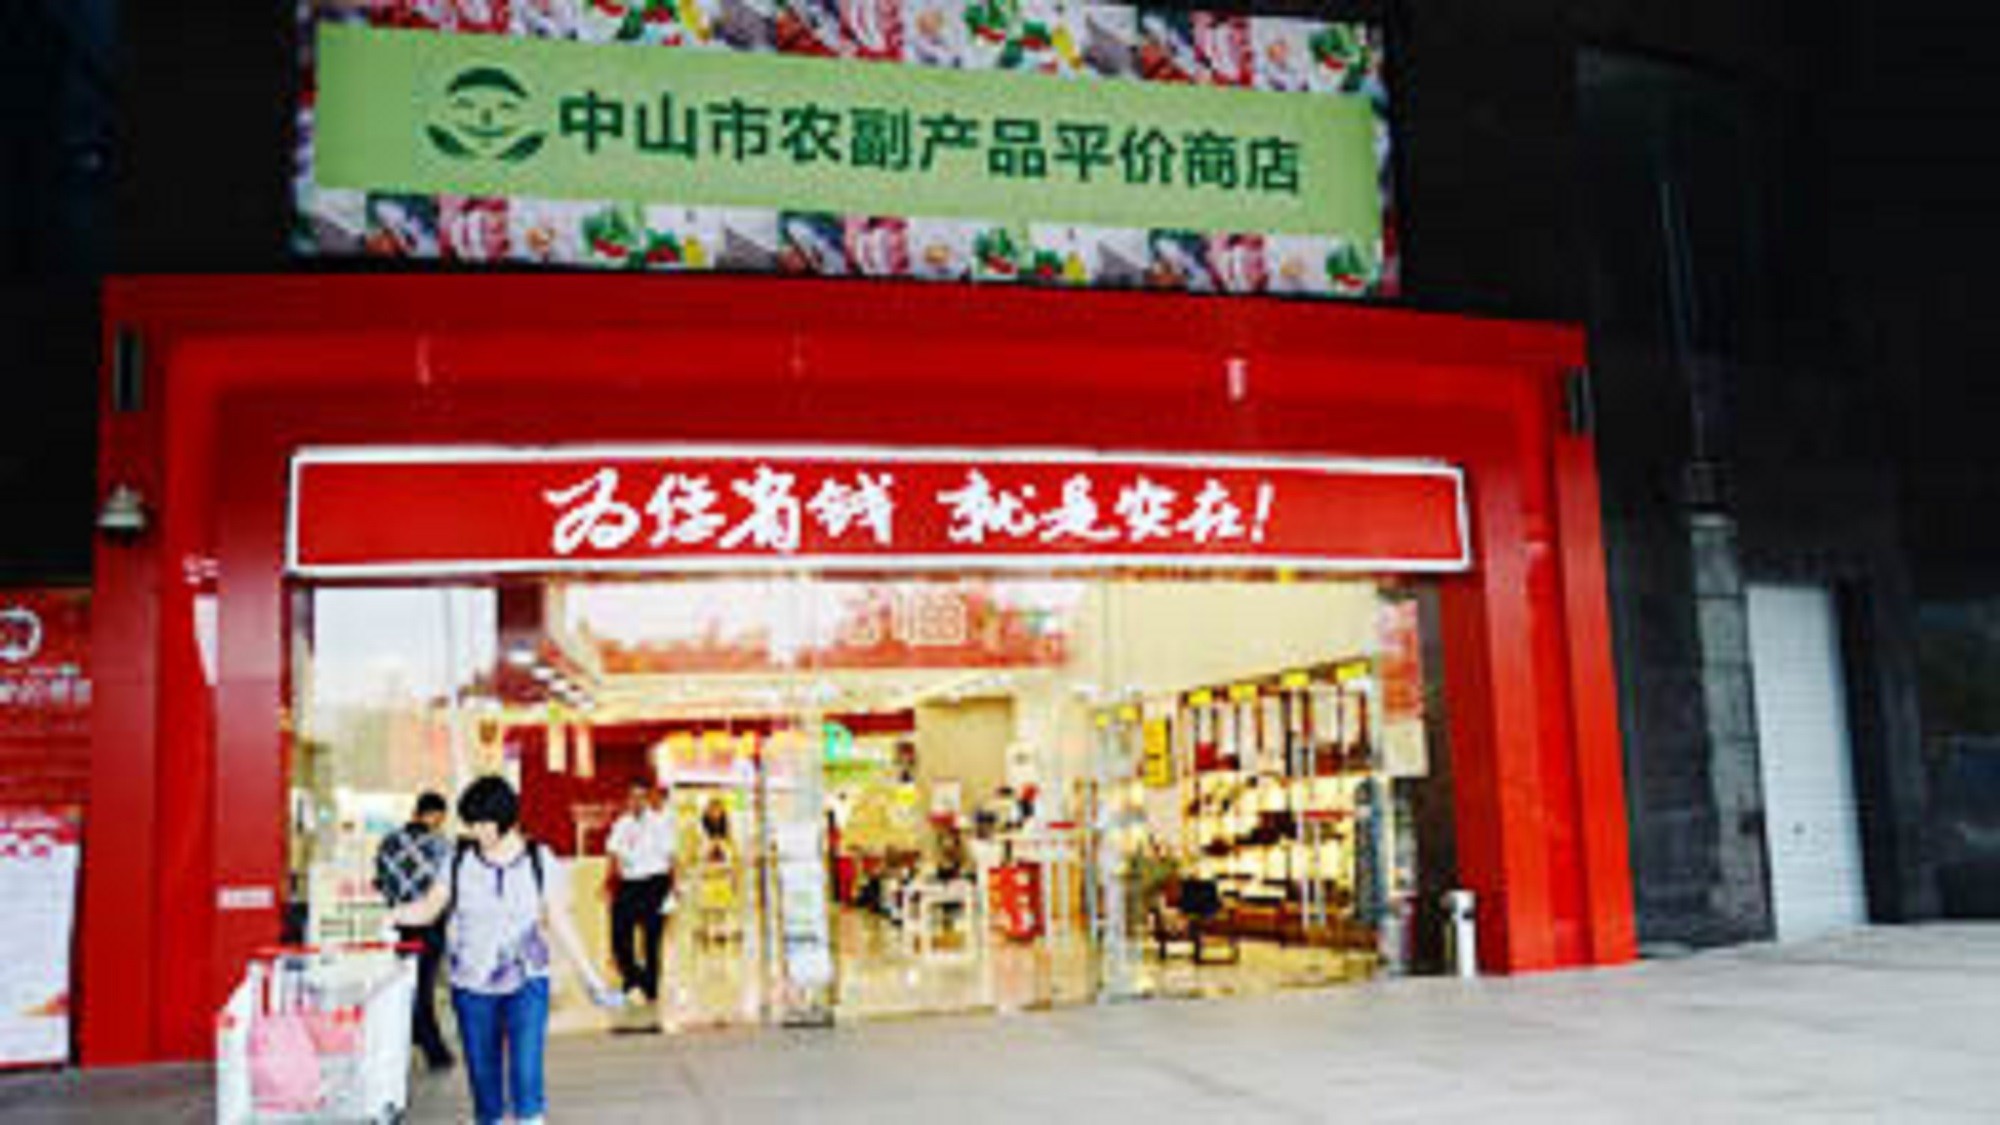 Zhongshanfreshproduce